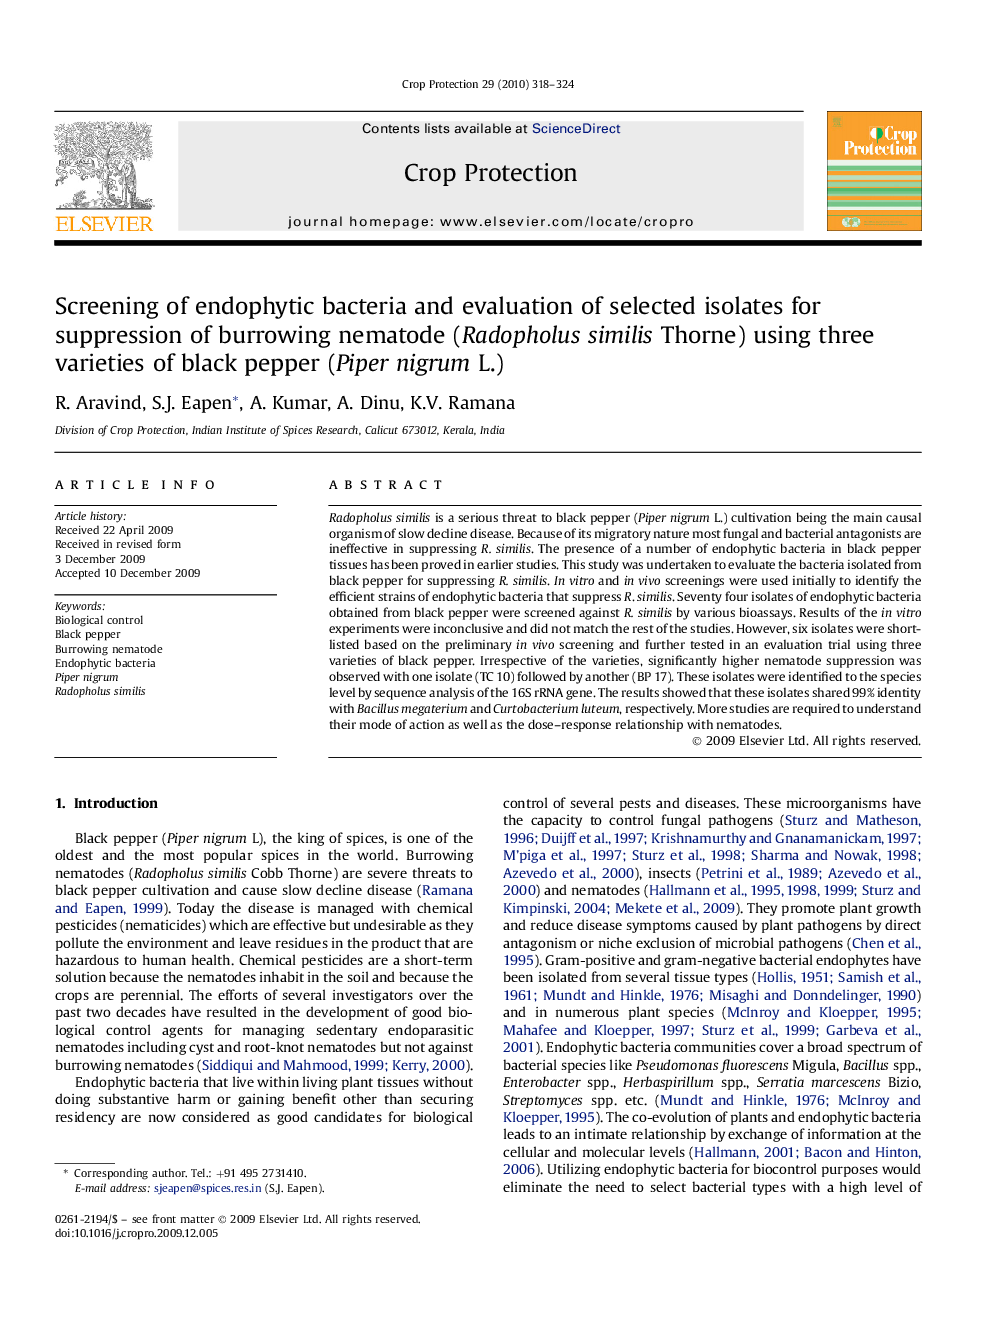 Screening of endophytic bacteria and evaluation of selected isolates for suppression of burrowing nematode (Radopholus similis Thorne) using three varieties of black pepper (Piper nigrum L.)